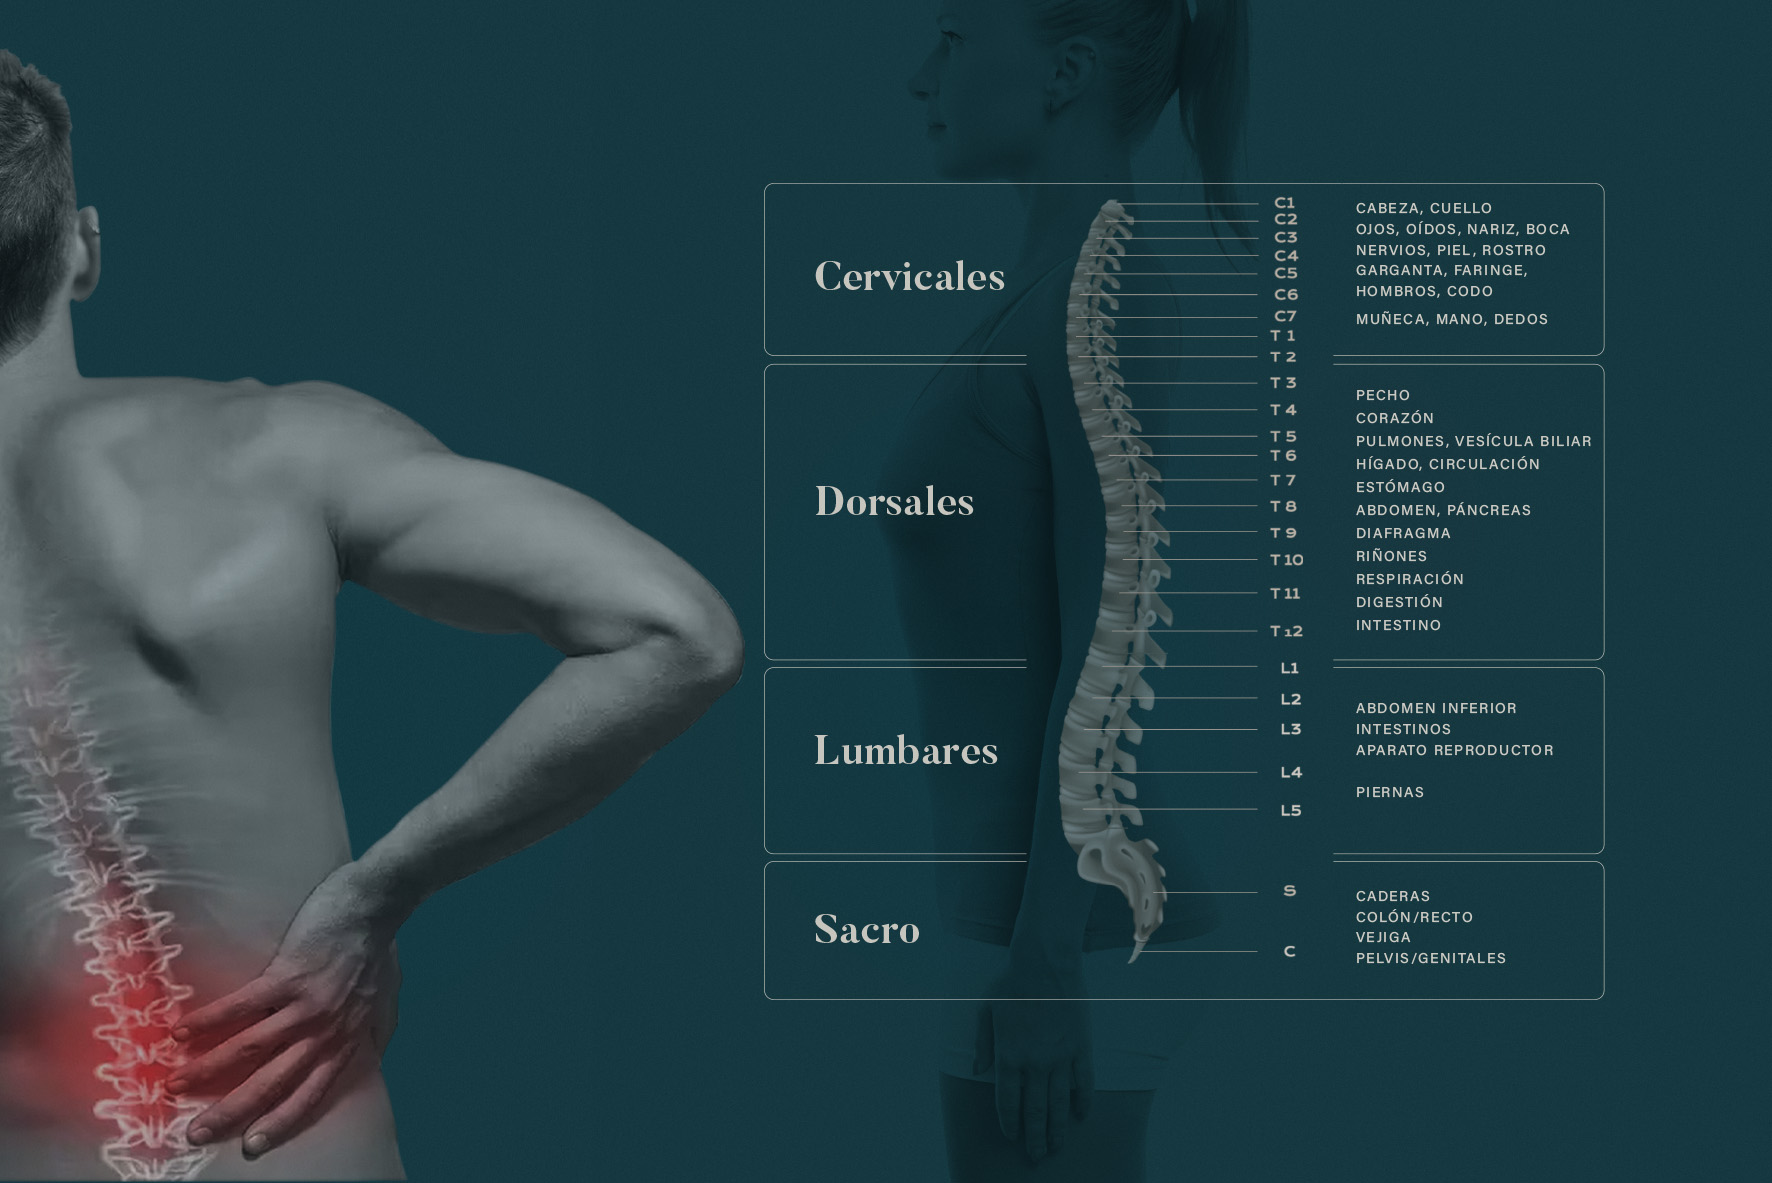 Columna vertebral: Dorsales, cervicales, lumbares.